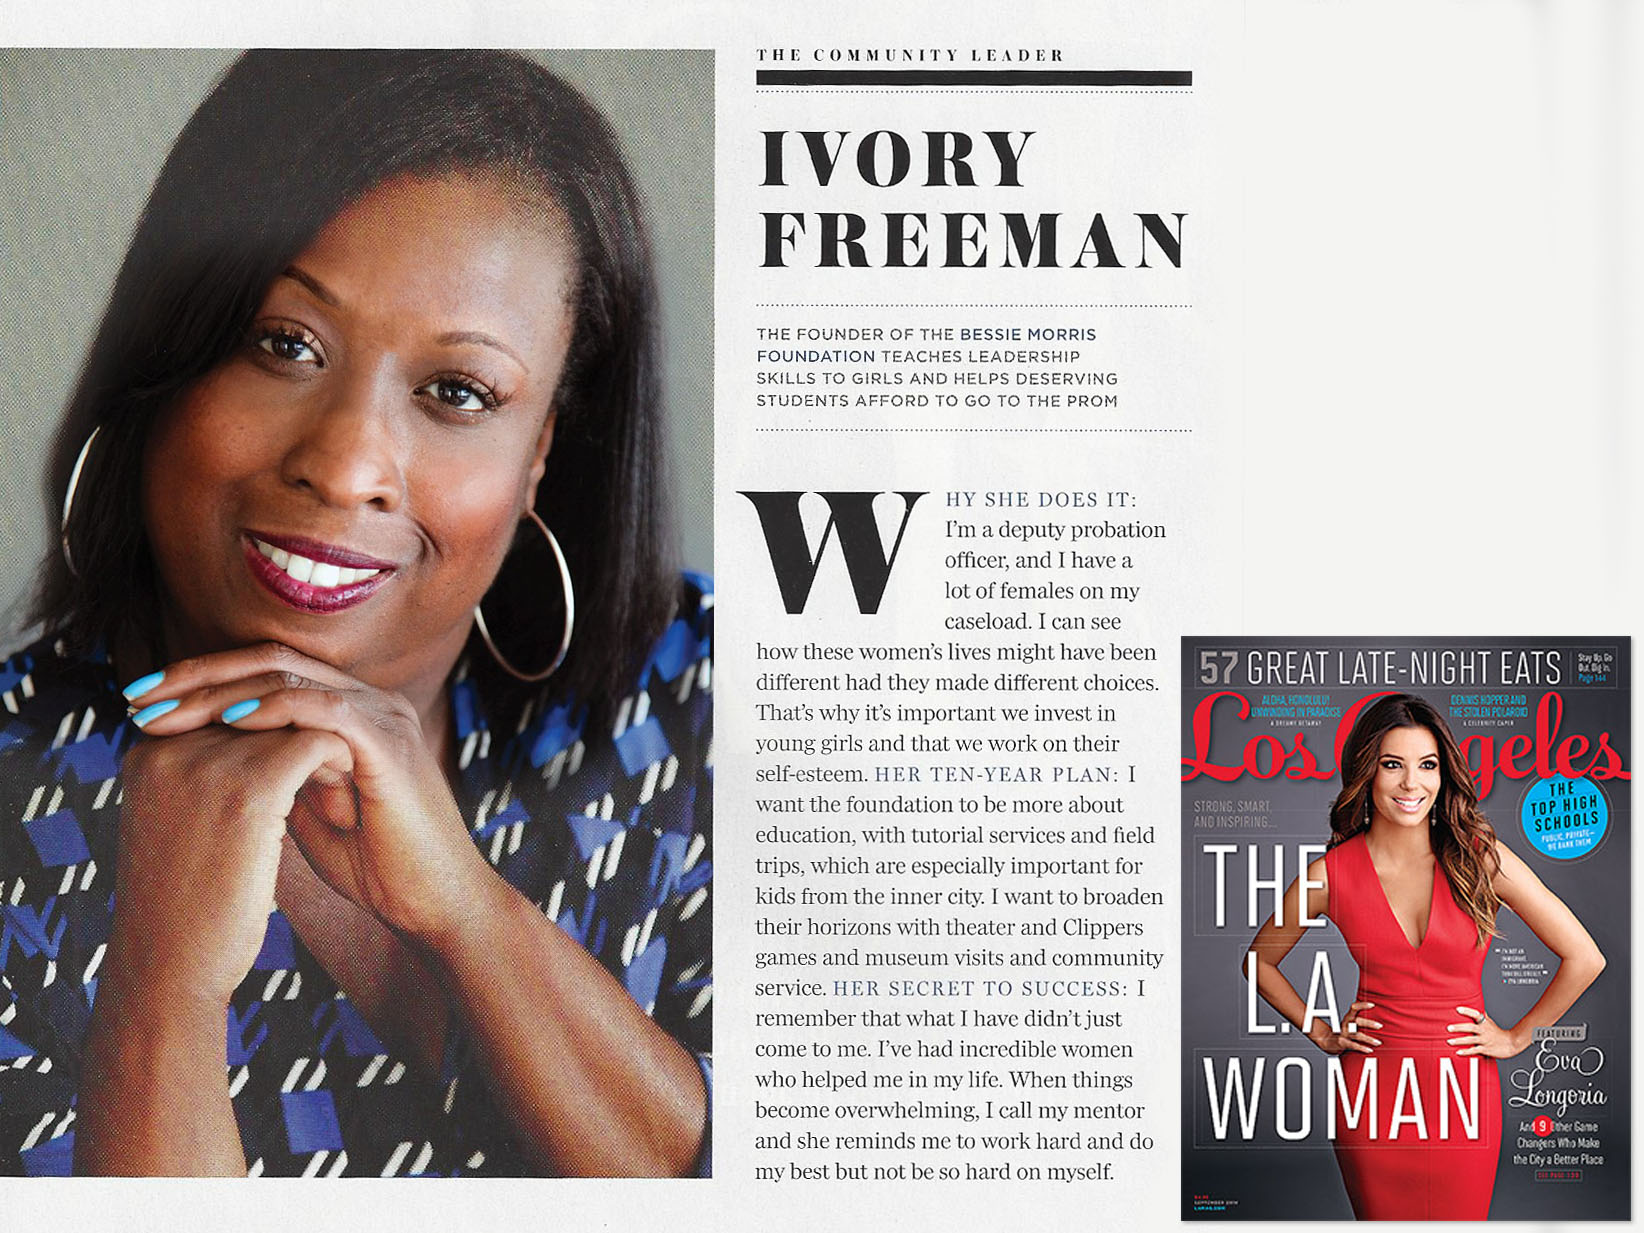 Ivory Freeman selected one of LA's most inspiring women by LA Magazine